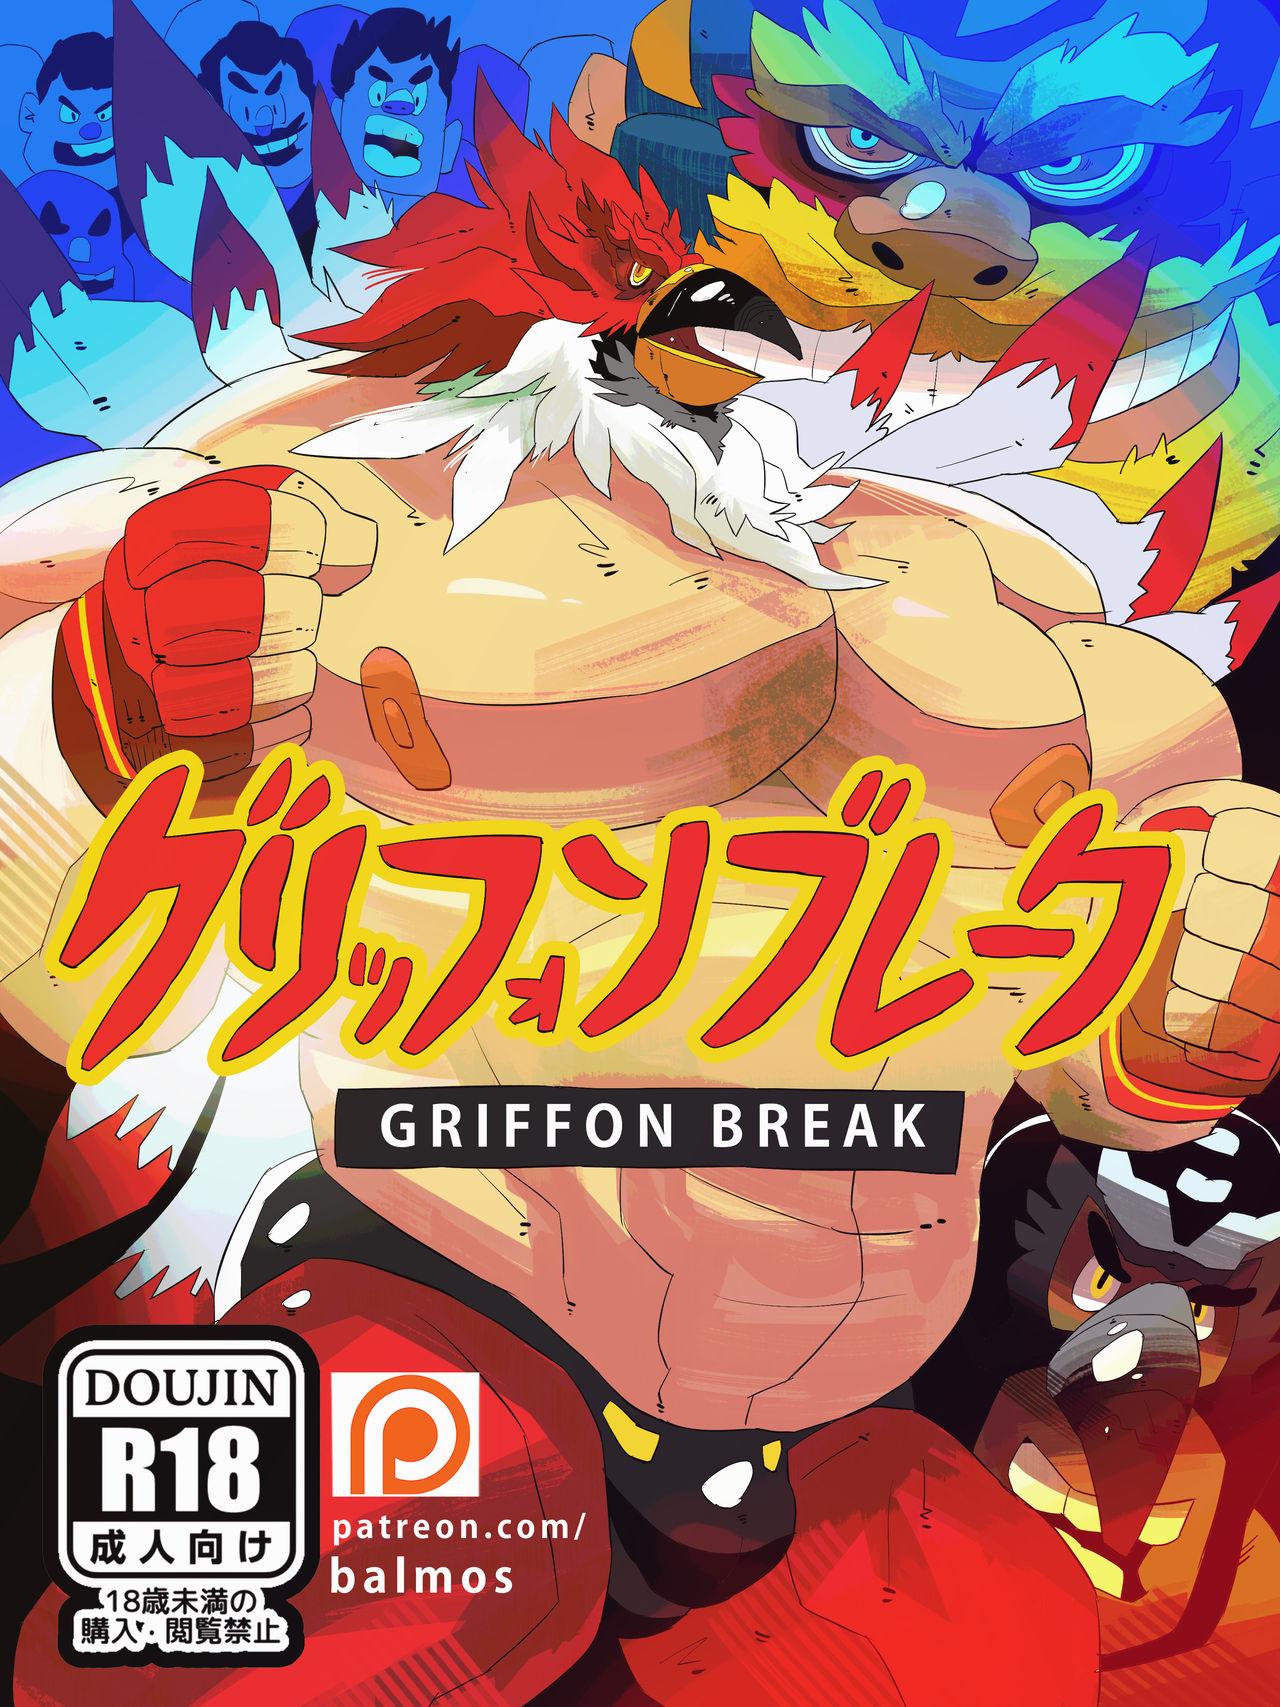 Lez Griffon Break HD - King of fighters Fatal fury | garou densetsu Shemale Porn - Page 1